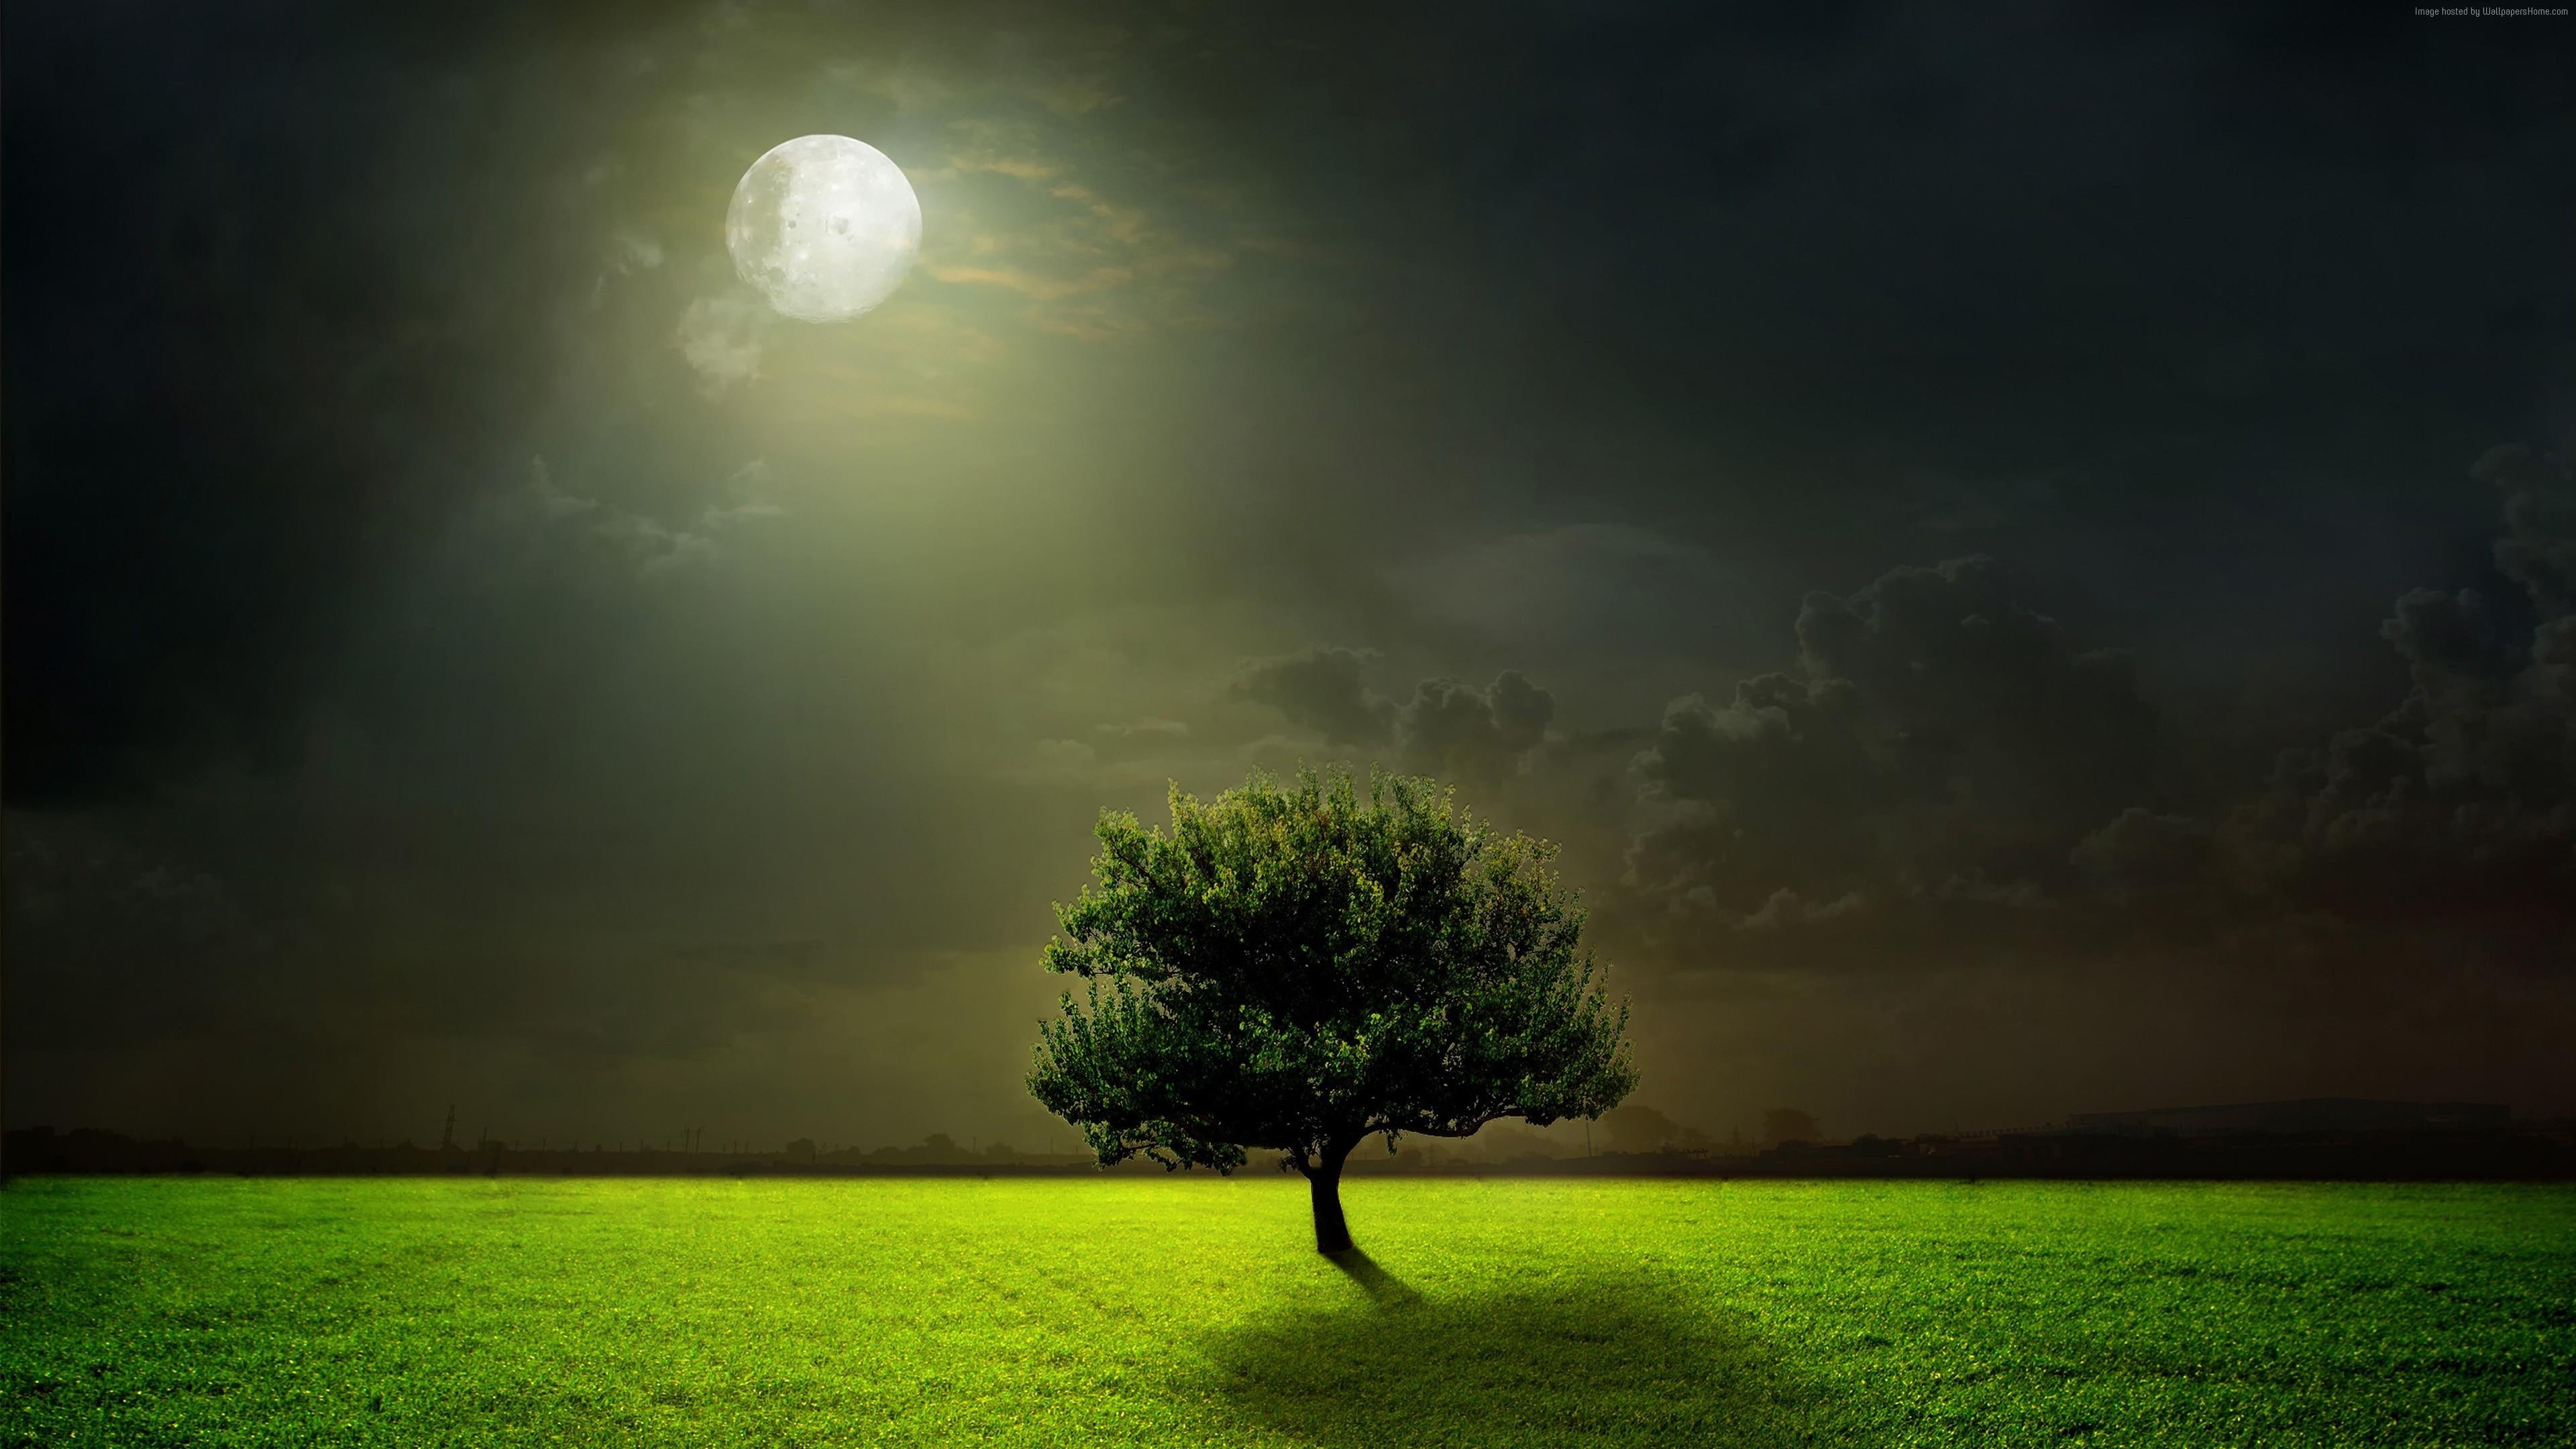 moonlit, dark, night sky, darkness, lone tree, lonely tree